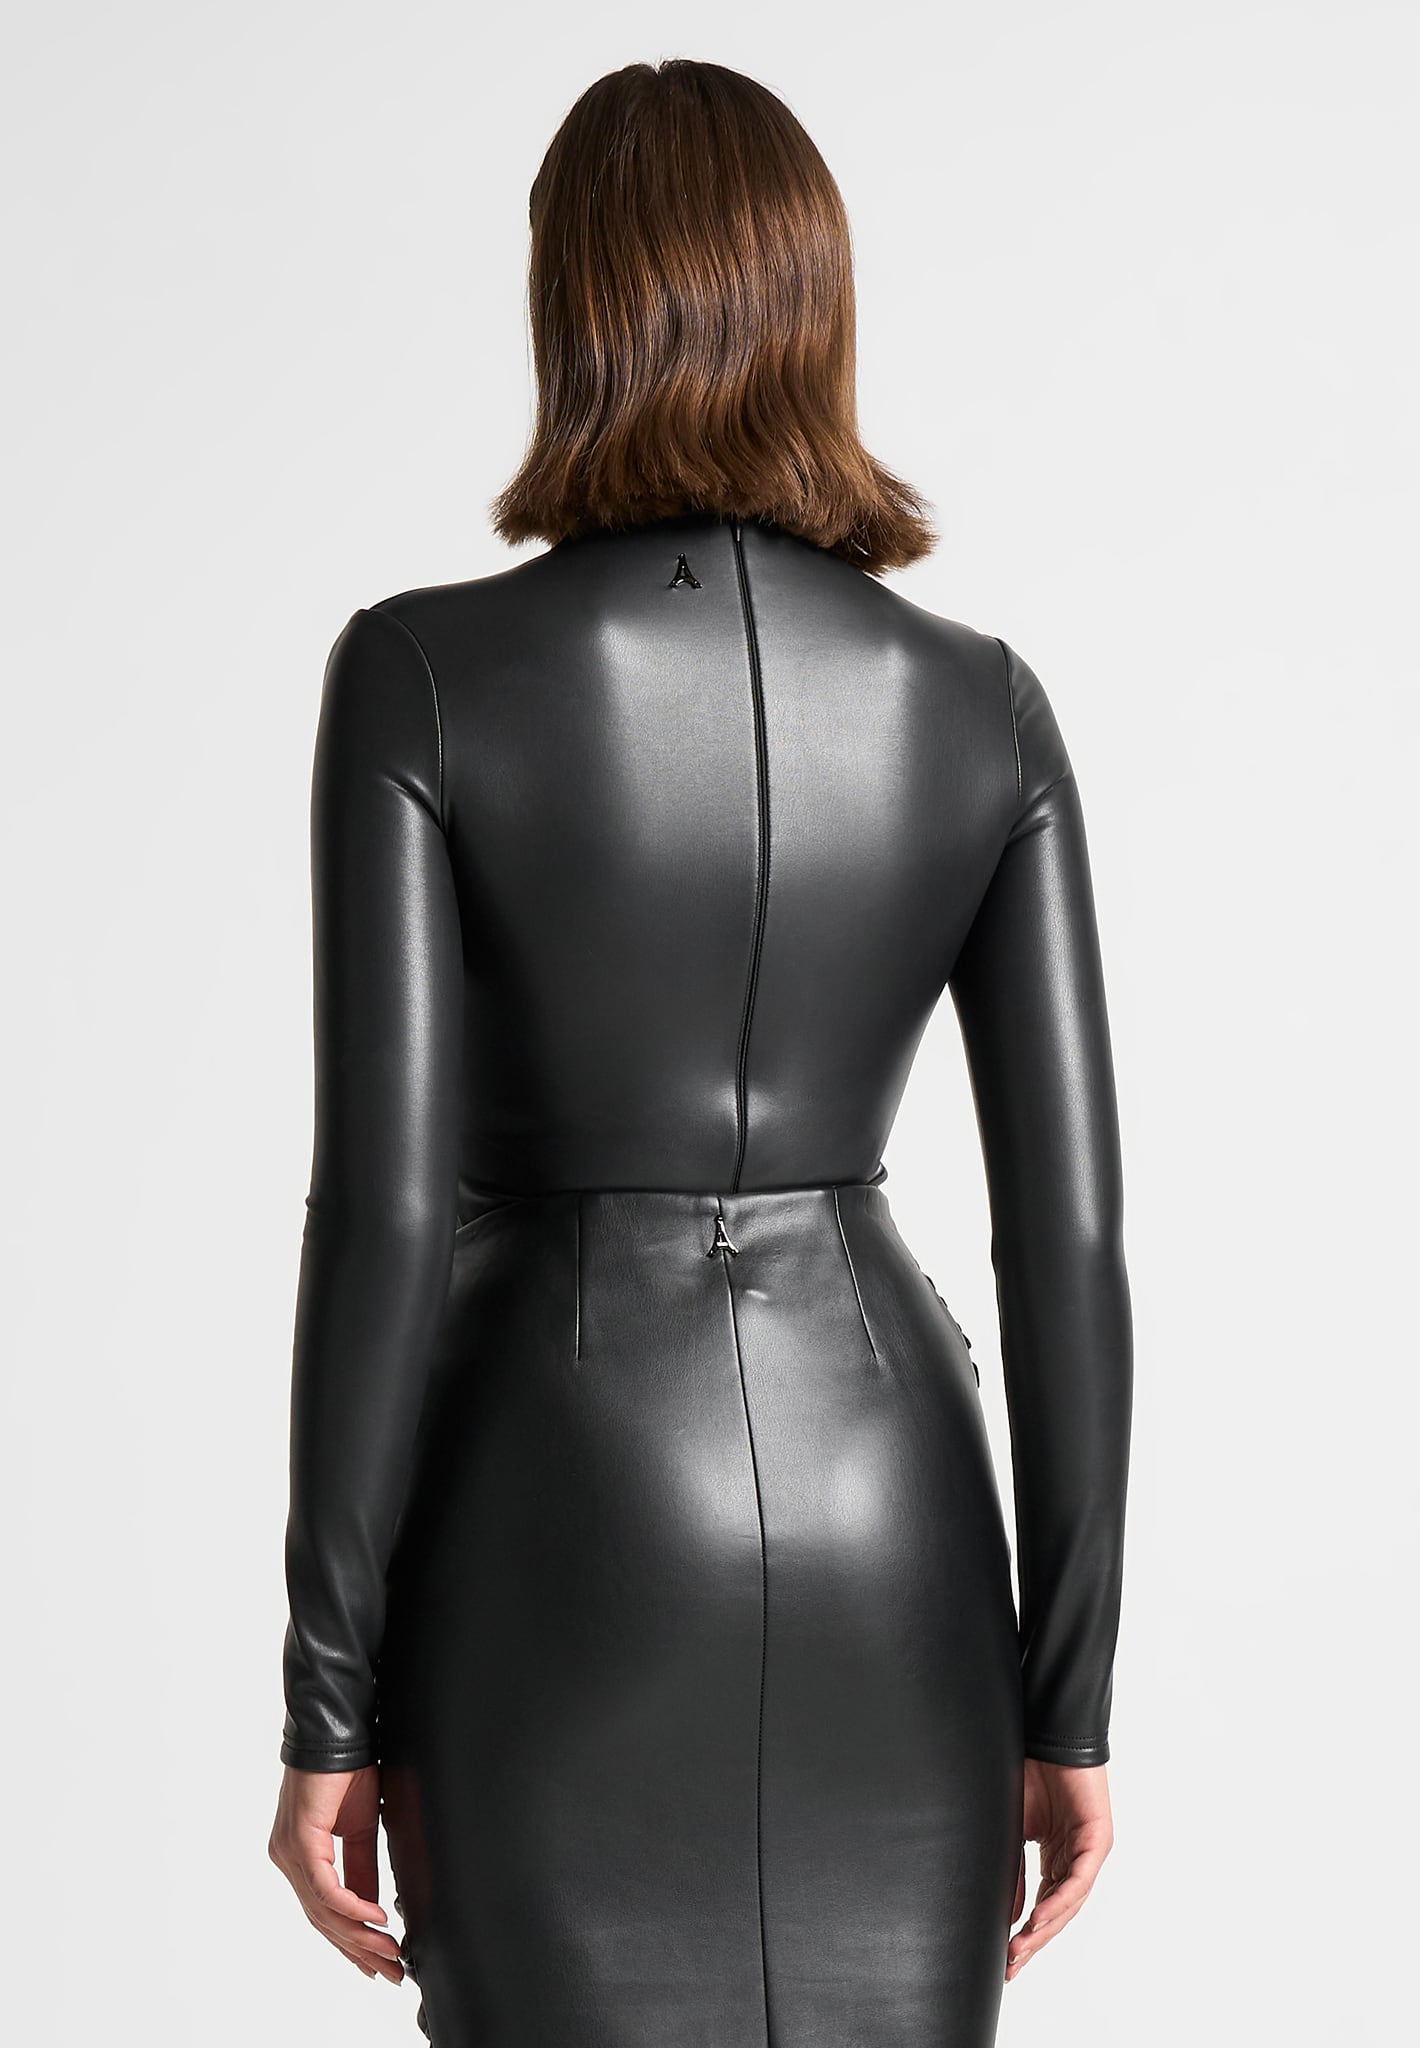 Leather Overlay High Neck Bodysuit - Black